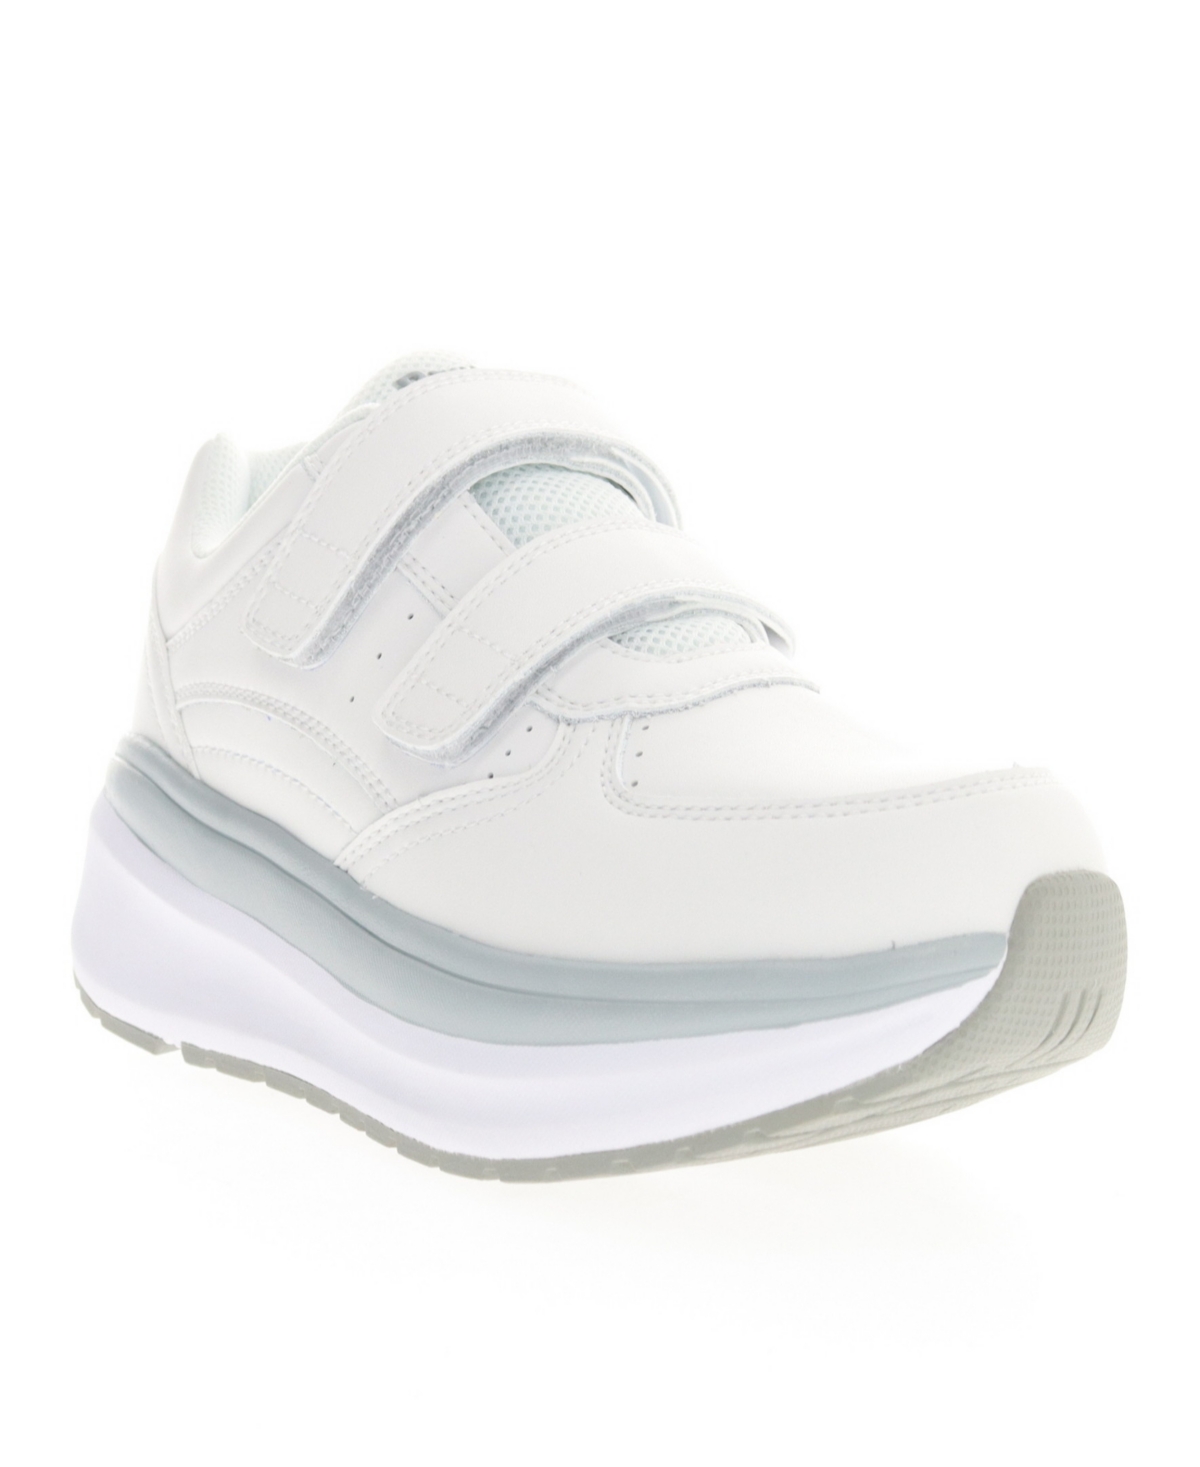 Women's Ultima Strap Sneakers - White